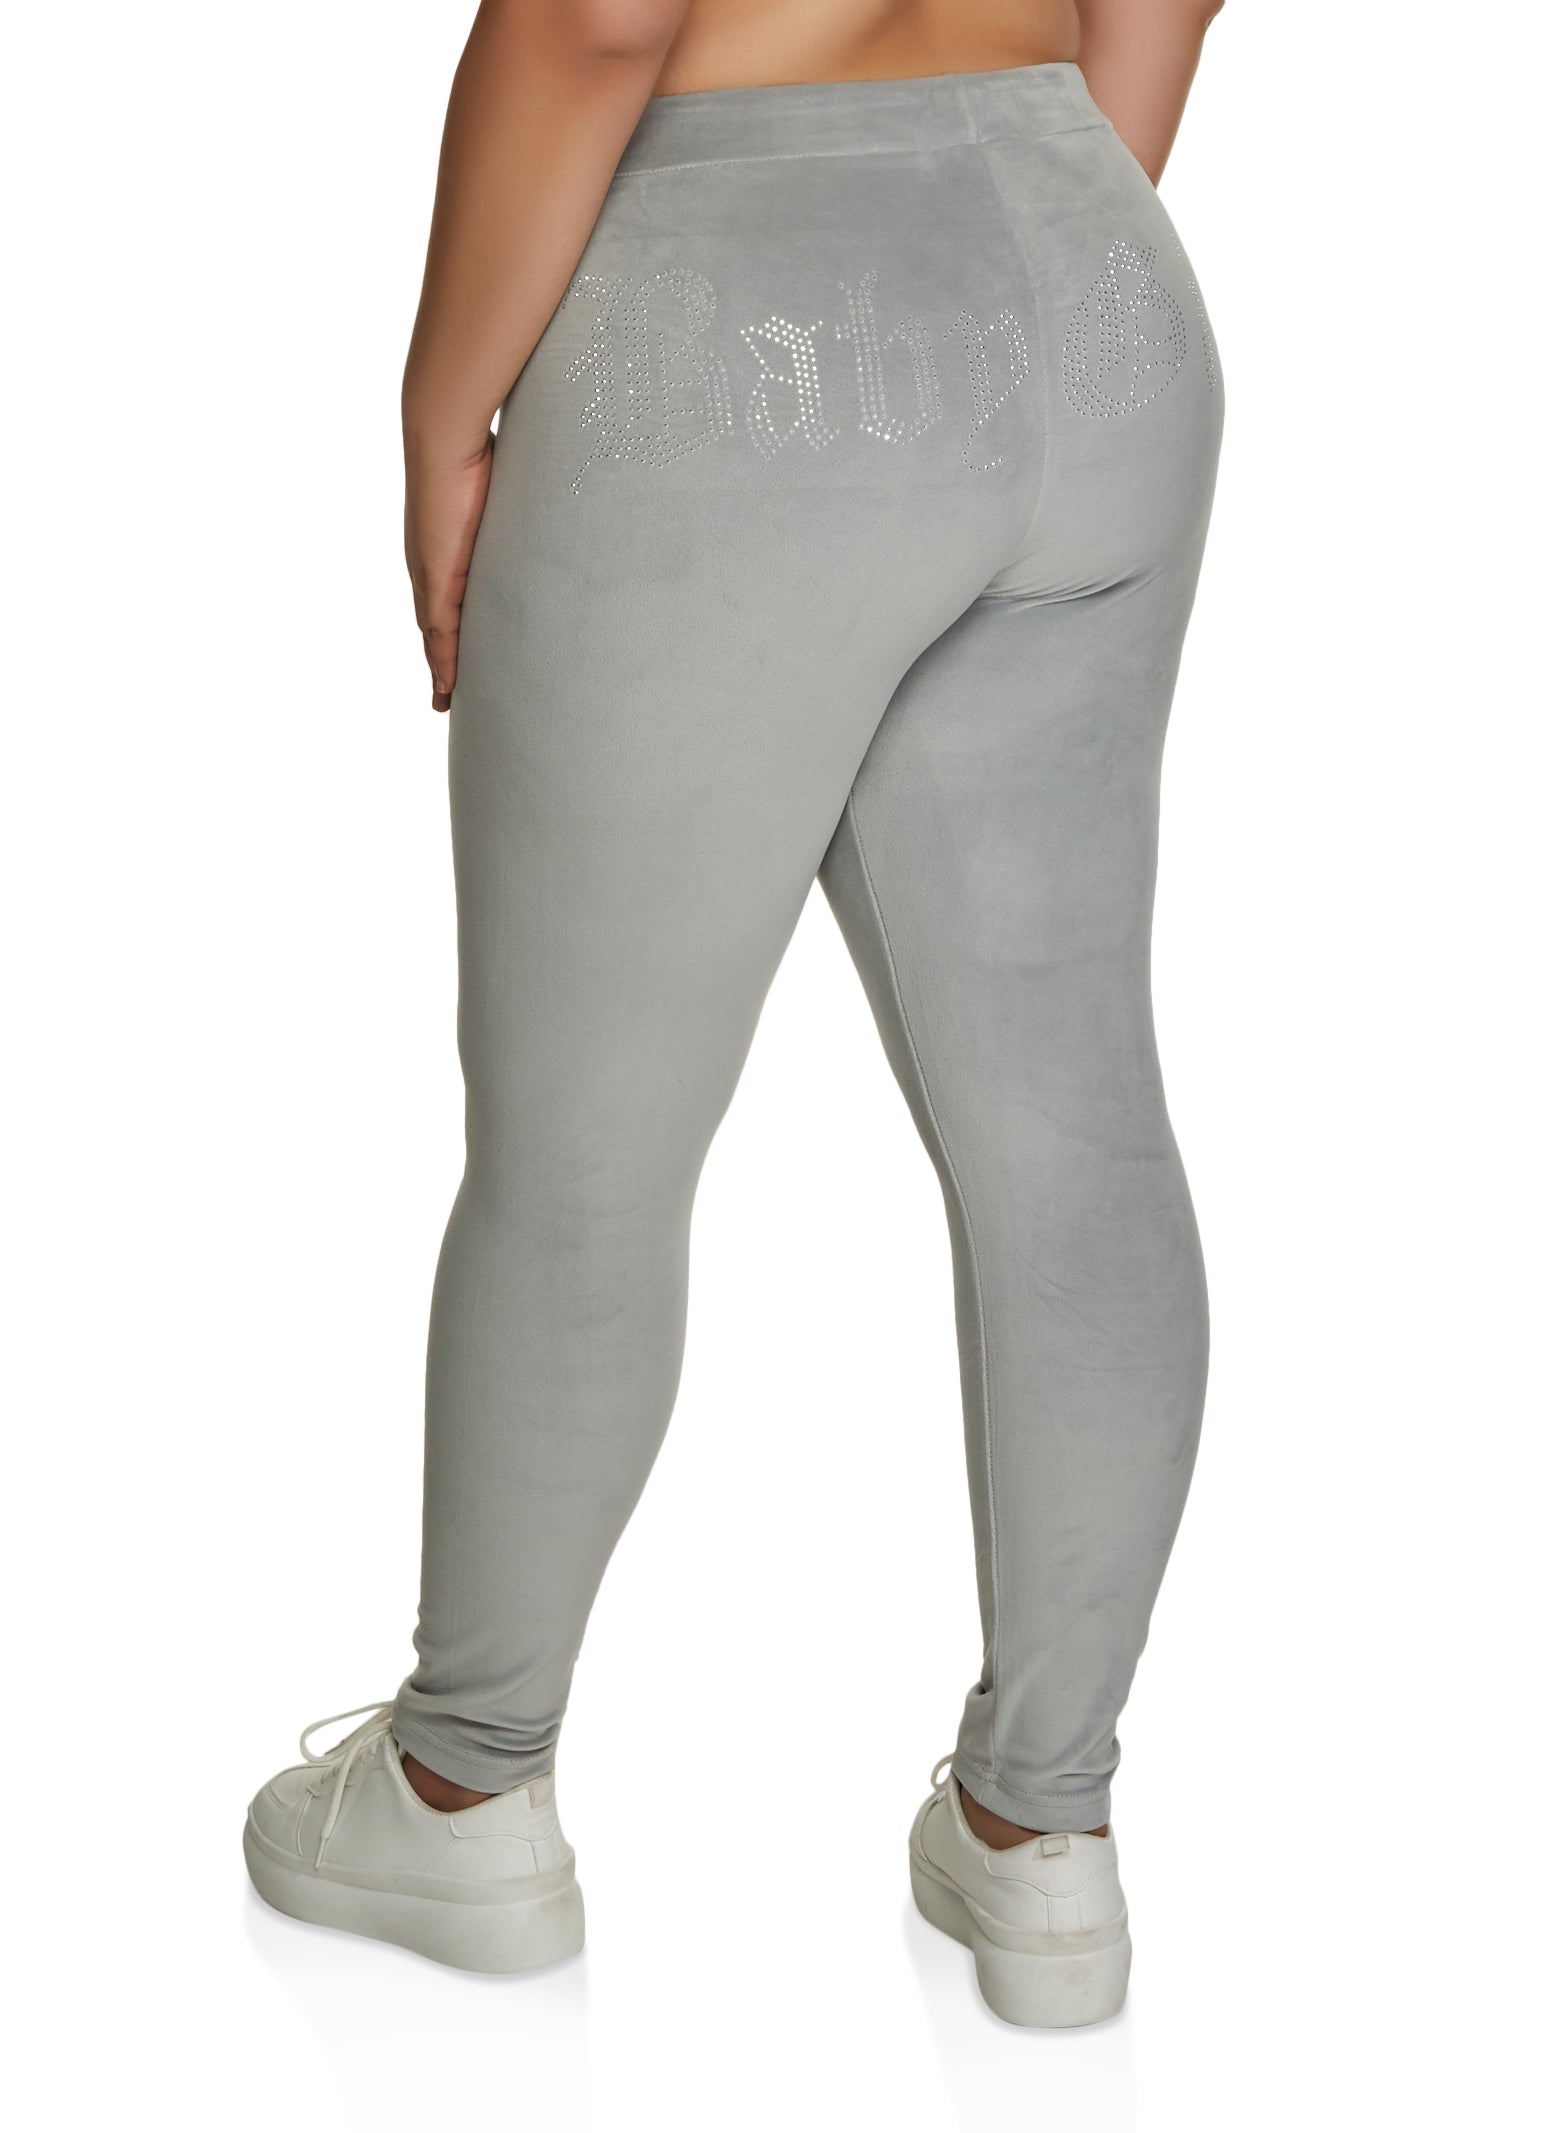 Bebe Sport Gray Active Pants Size 1X (Plus) - 55% off